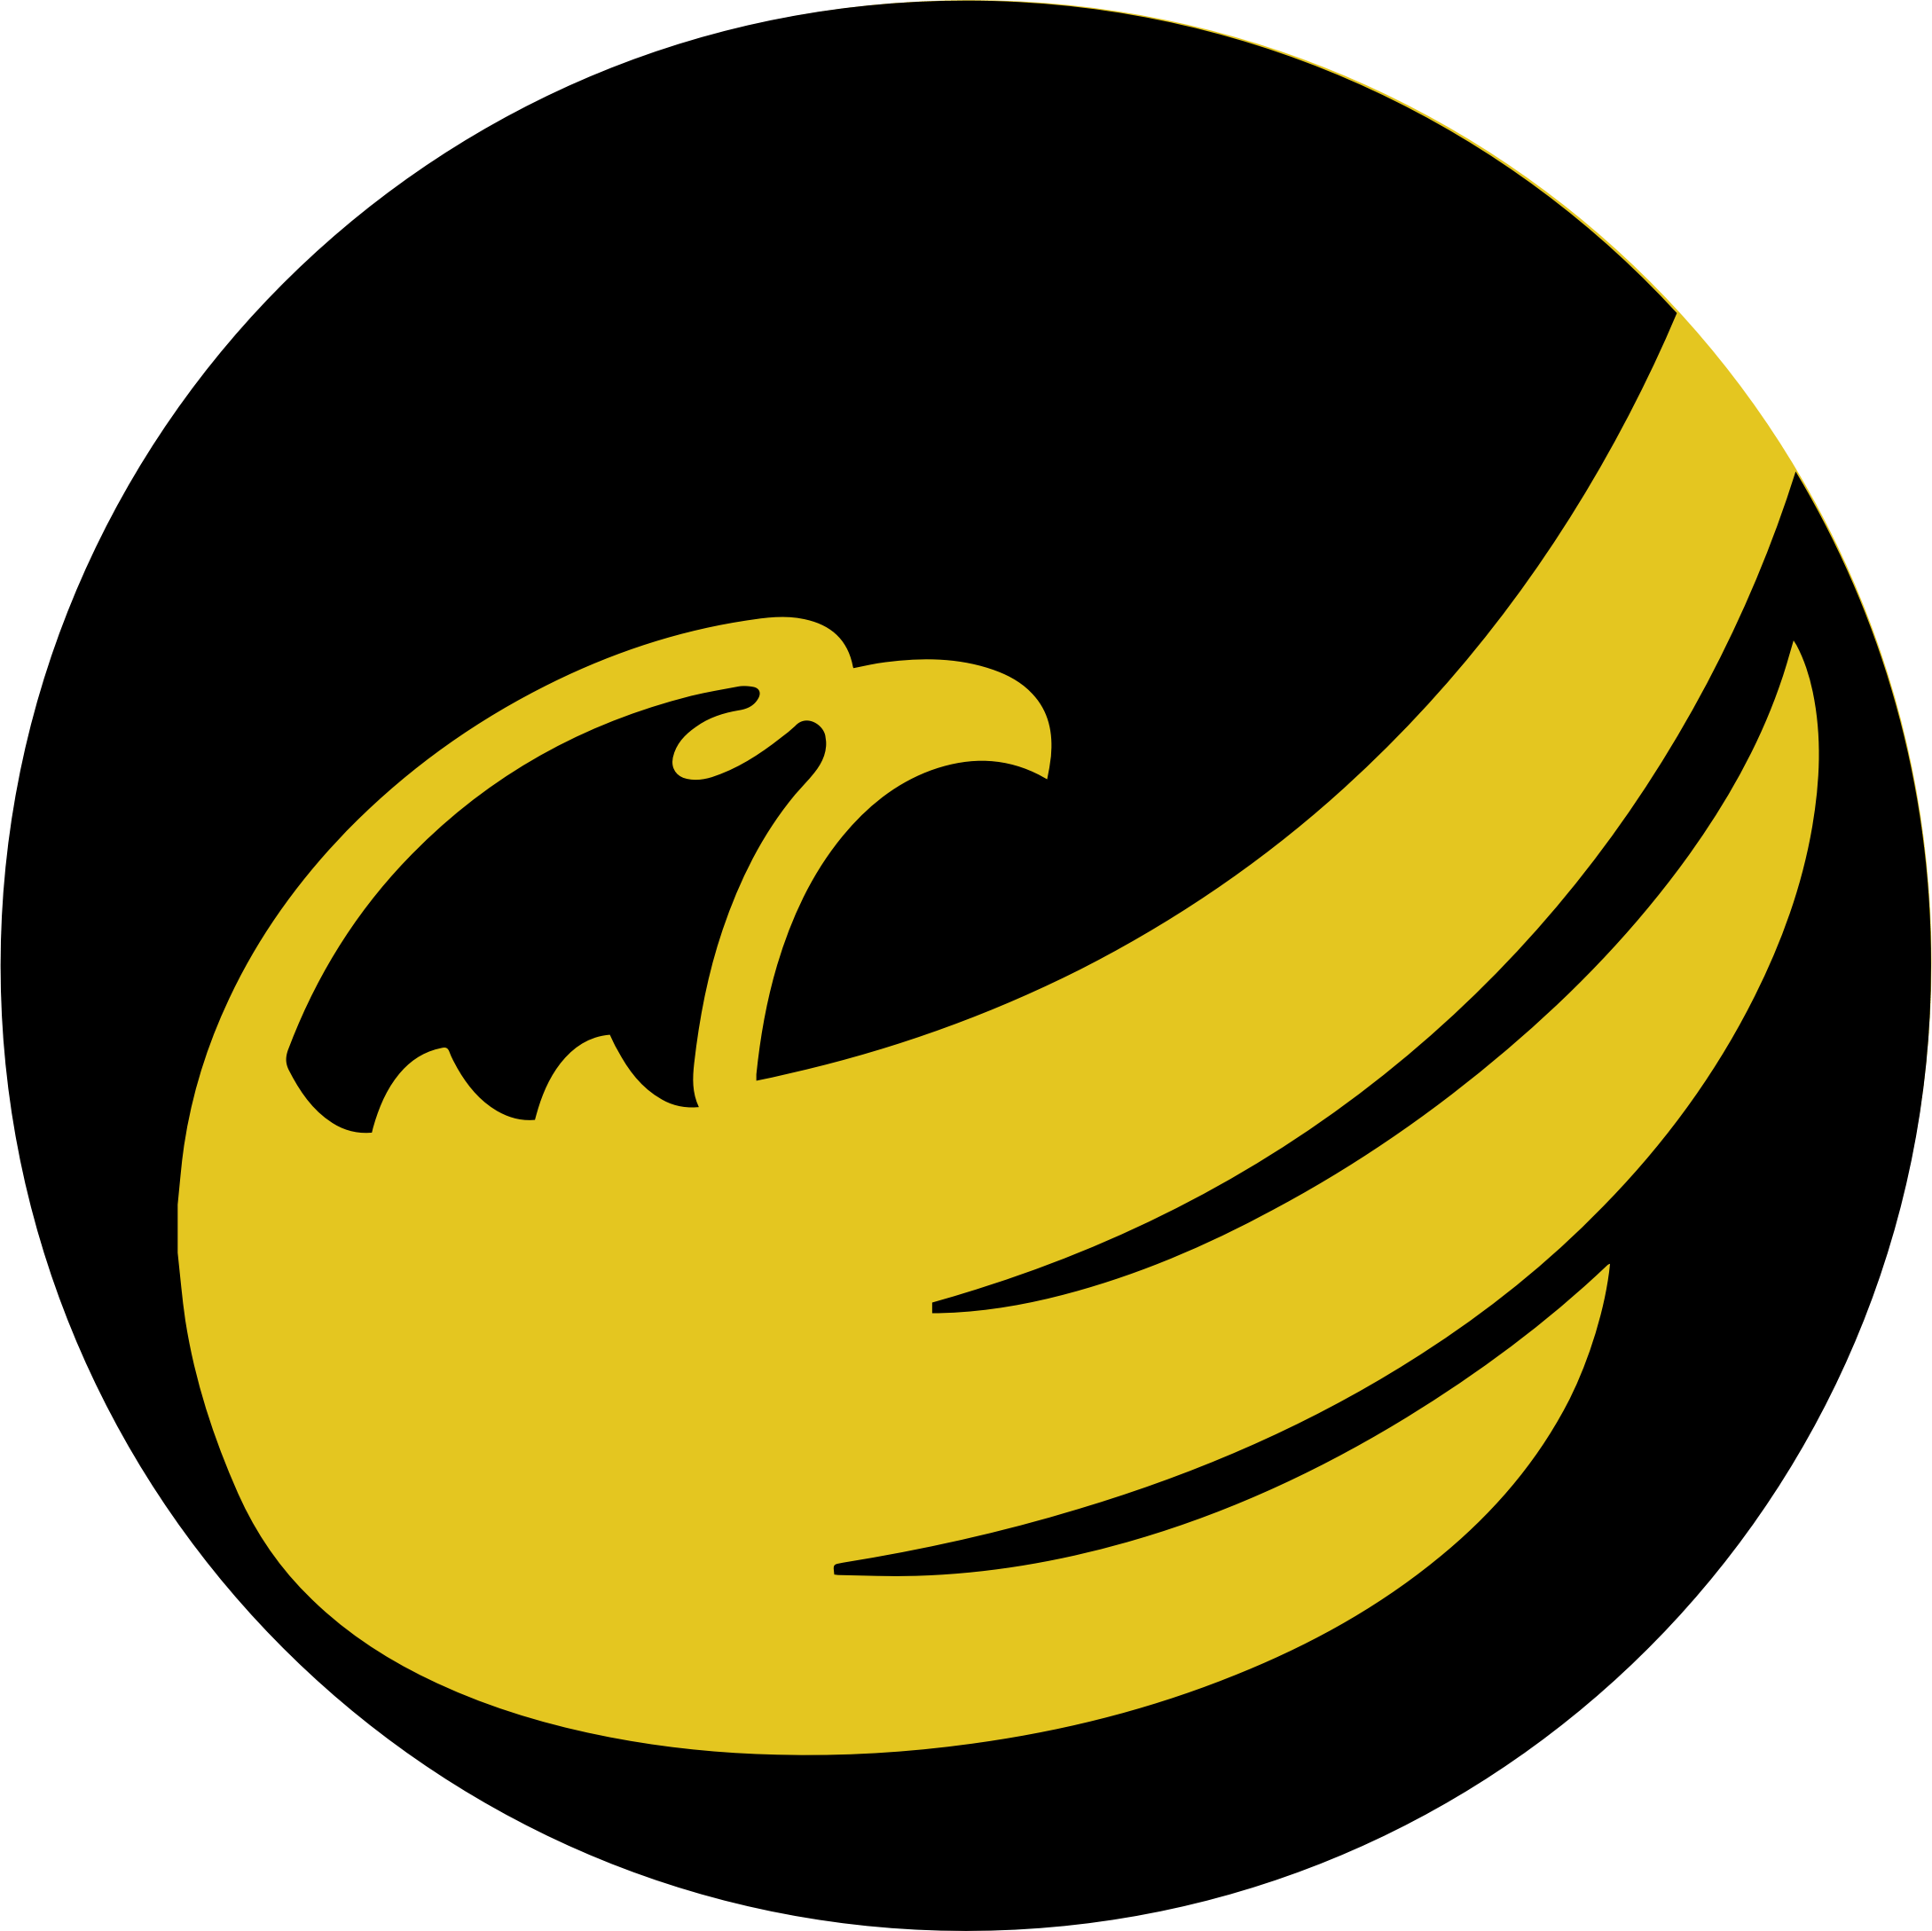 Black and Yellow Circle Logo - Clipart - logo-circle: libertarian eagle remix - black on yellow